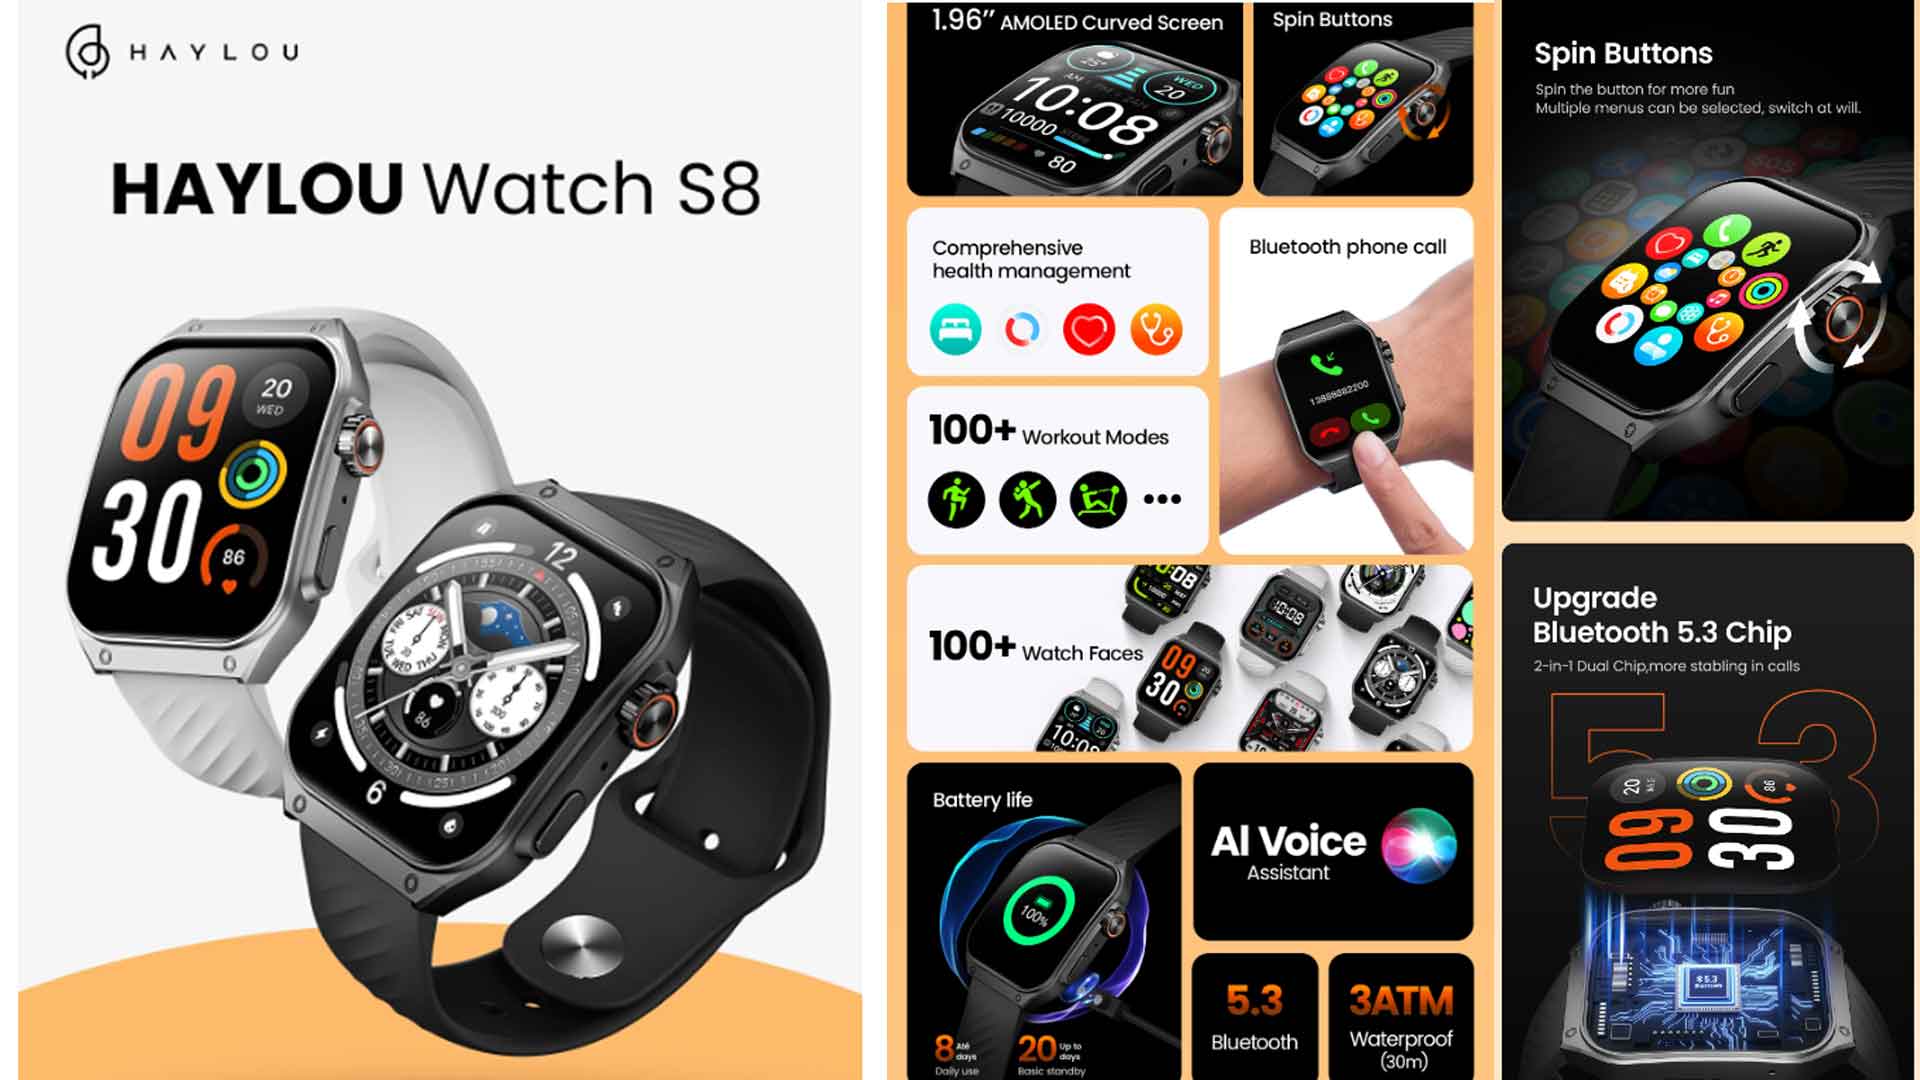 HAYLOU Watch S8, HAYLOU Watch S8 review, HAYLOU Watch S8 features, HAYLOU Watch S8 specs, HAYLOU Watch S8 price, smartwatch